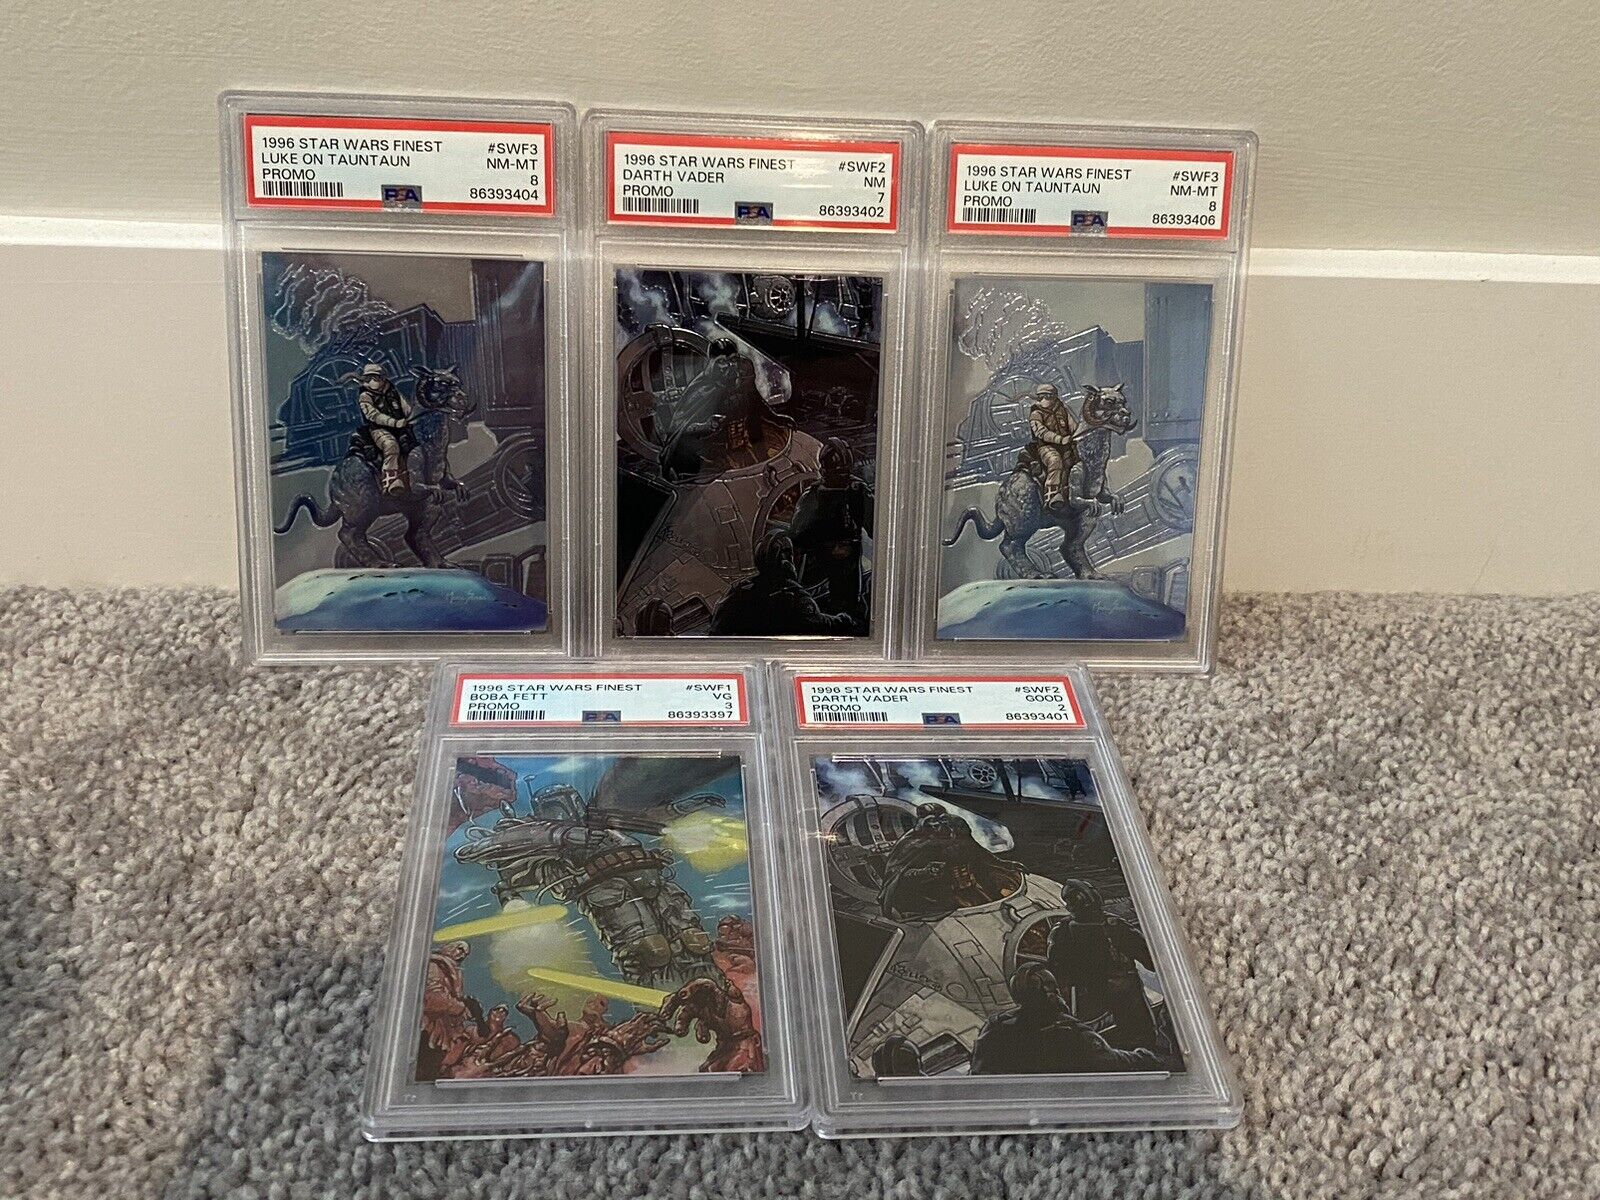 1996 Star Wars Finest Promo PSA Card Bundle Lot - 5 Cards